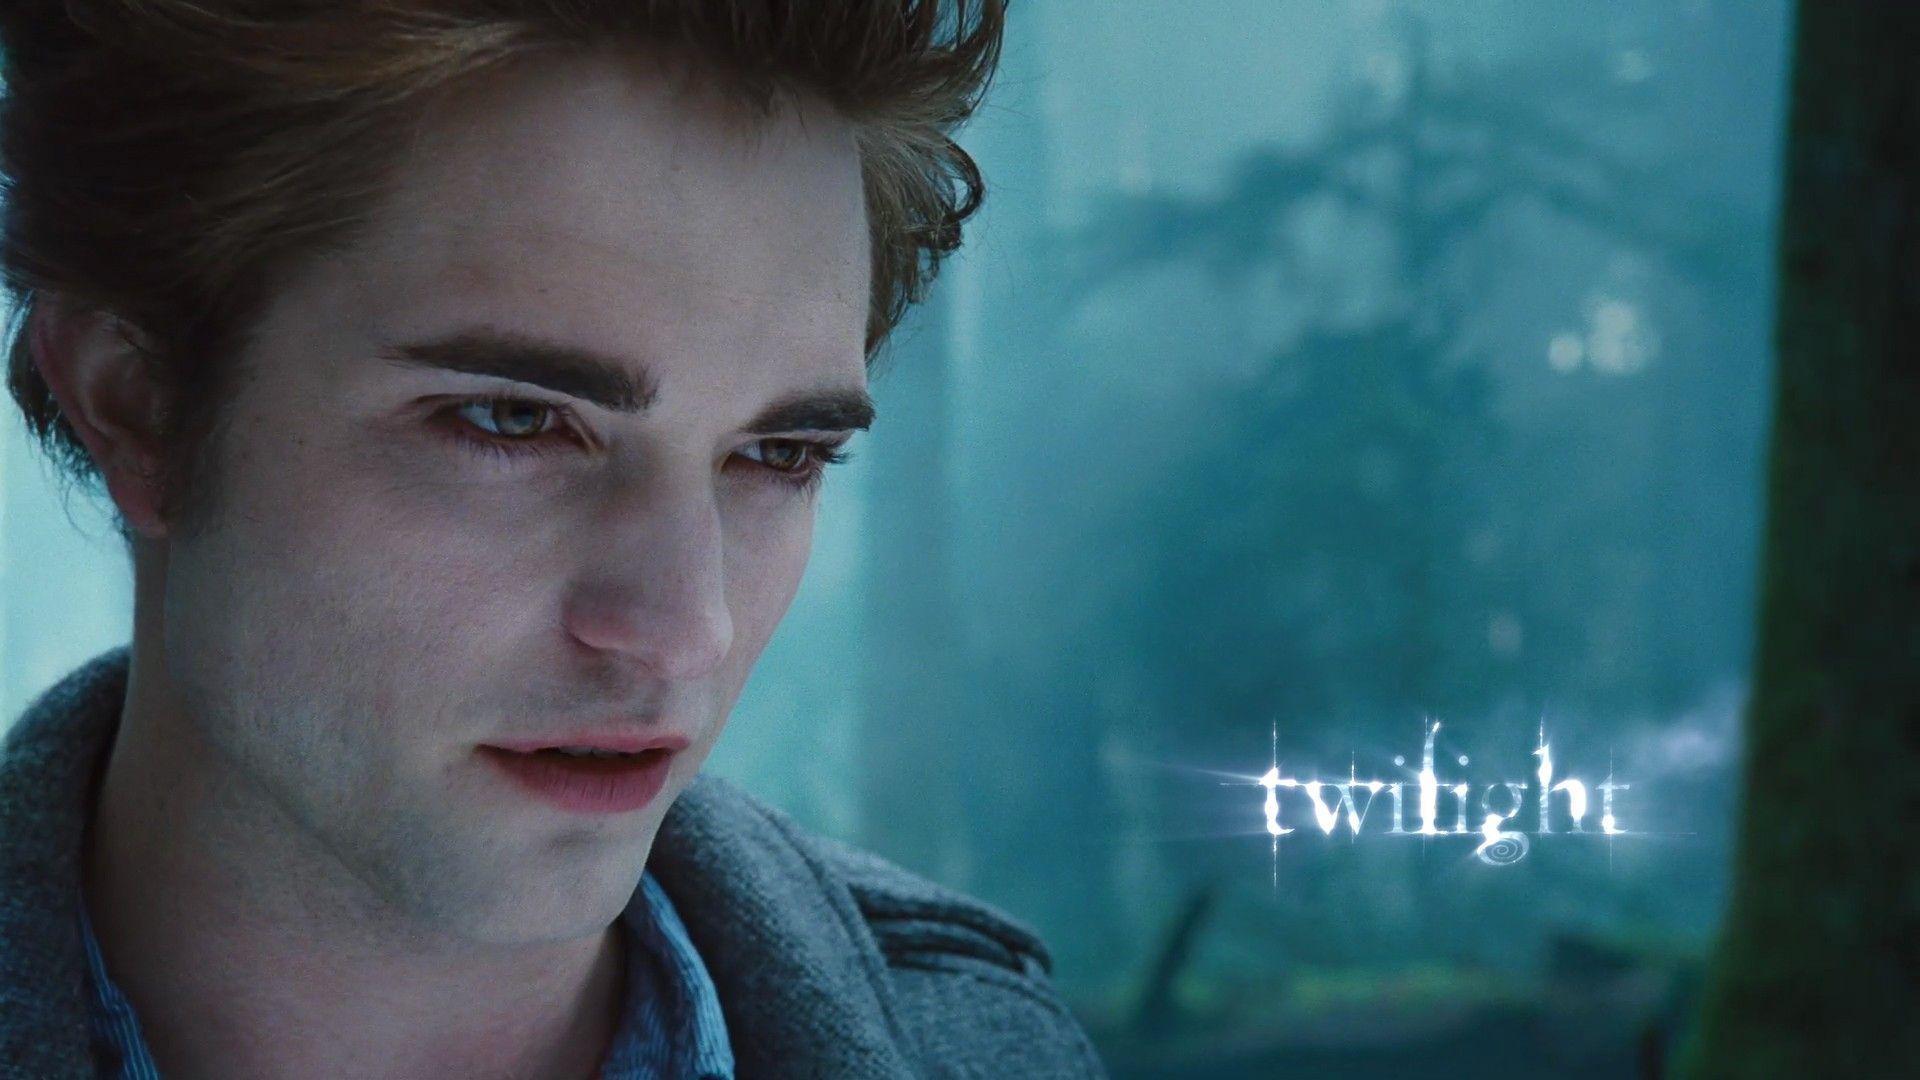 Robert Pattinson Twilight 11990 HD Wallpaper Picture. Top